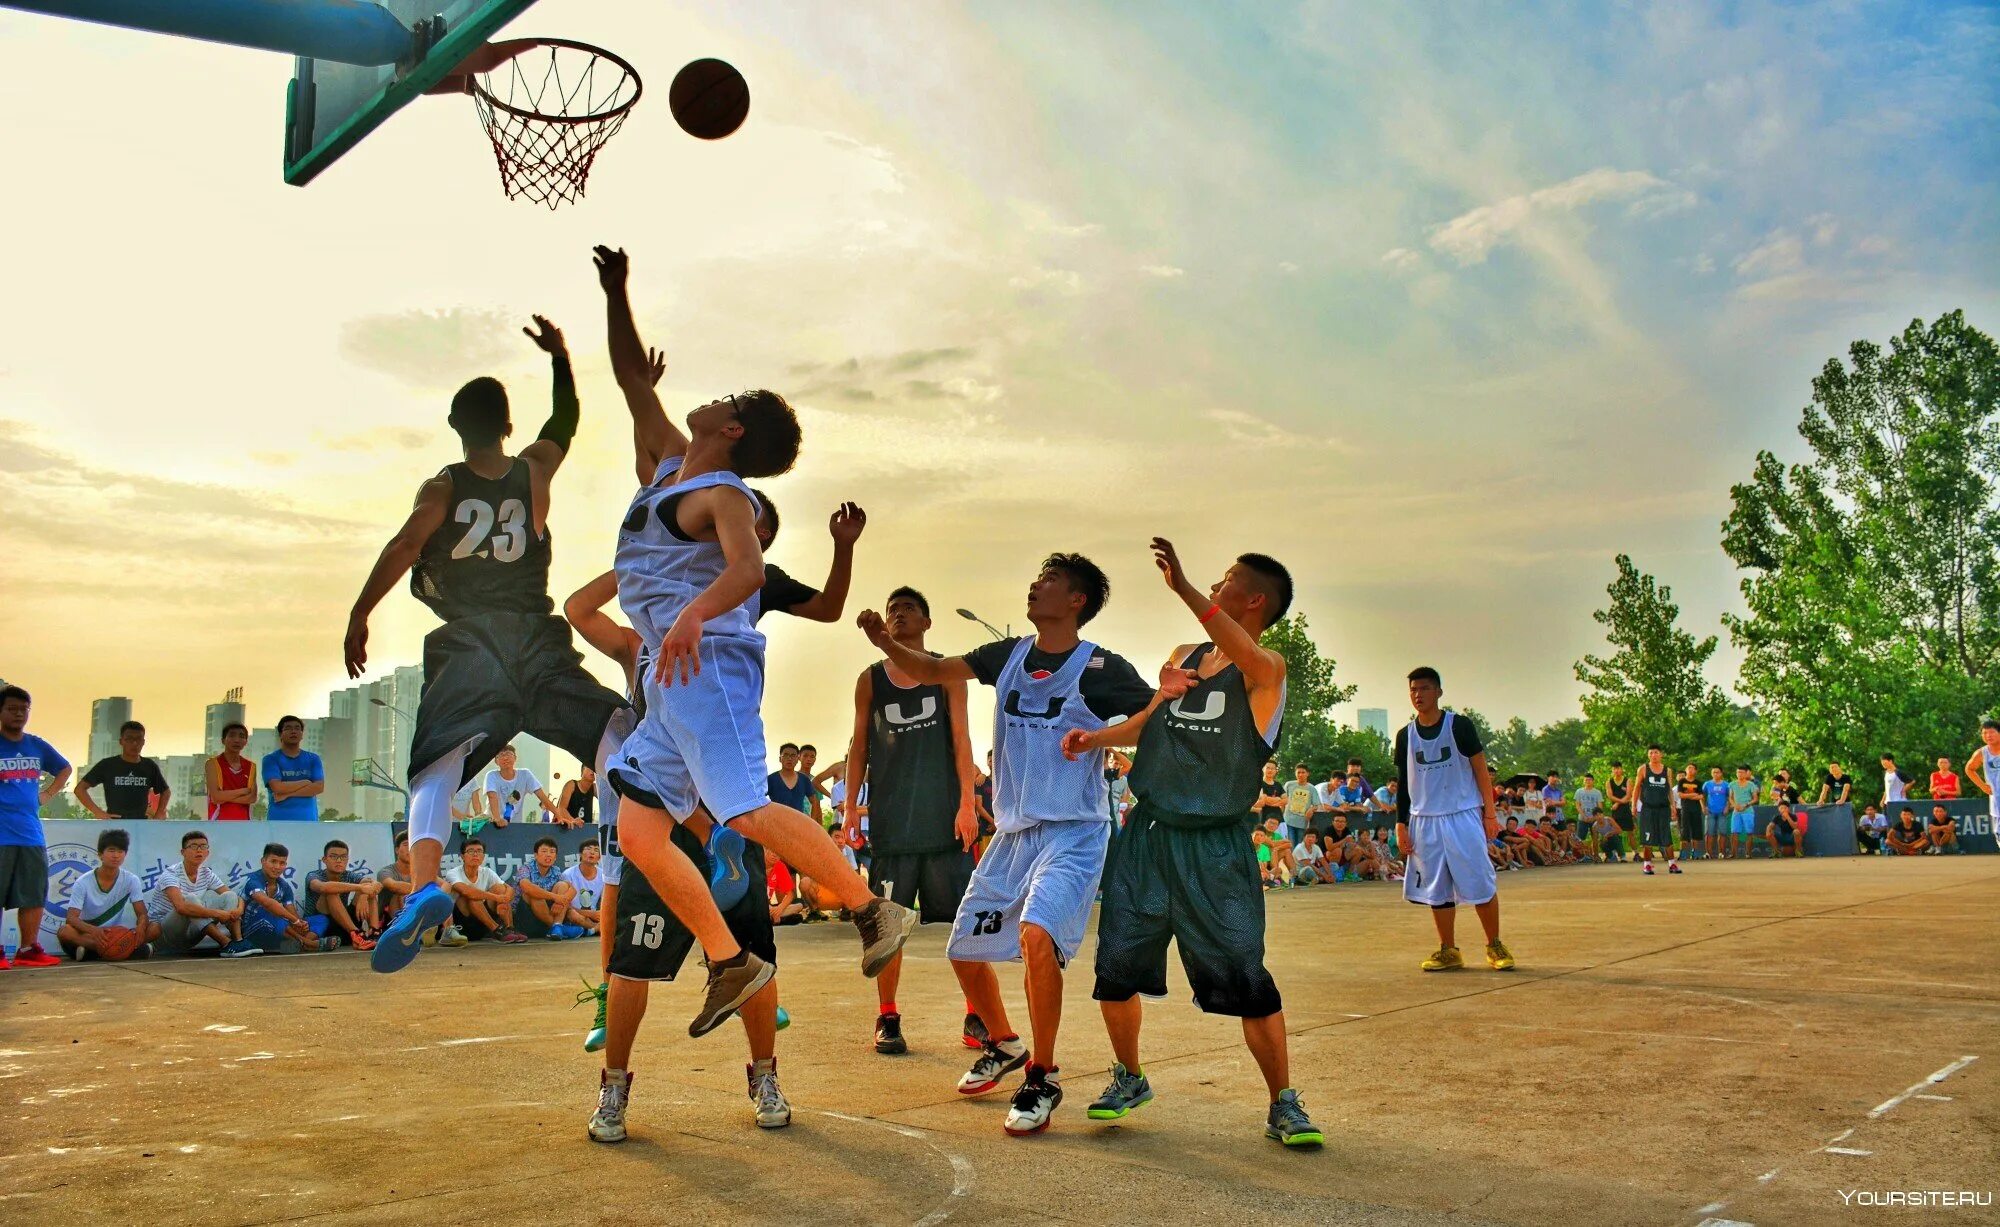 Спорт баскетбол. Баскетбол дети. Стритбол дети. Дети играющие в баскетбол. Спортивные игры фотографии